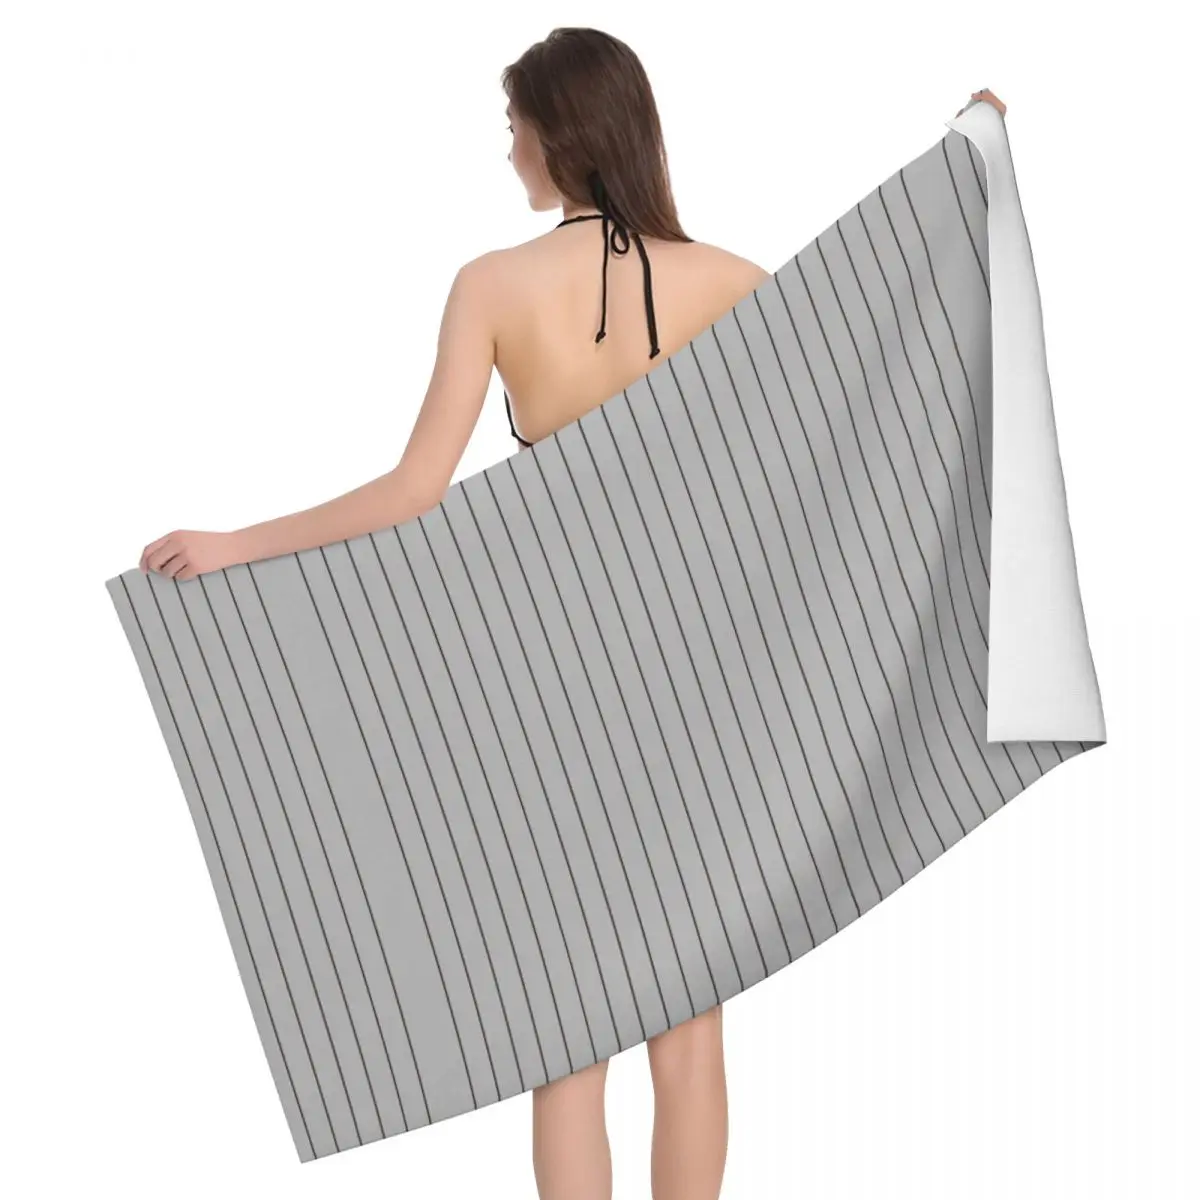 

Decorative Element Beach Towels Pool Towels Large Sand Free Microfiber Beach Towels, Quick Dry Lightweight Bath Swim Towels